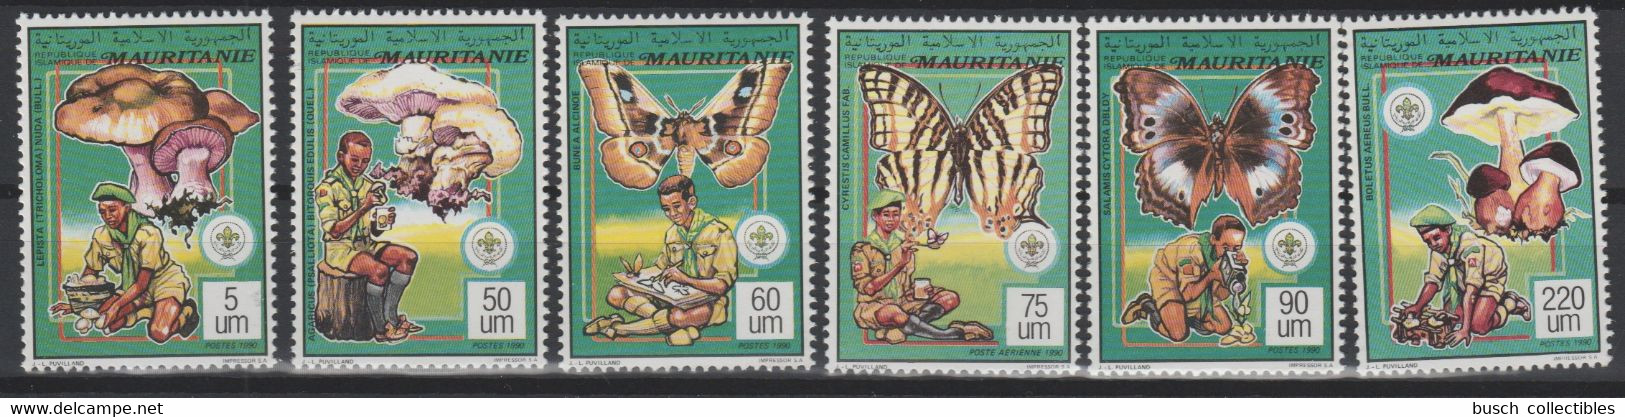 Mauritanie Mauretanien Mauritania 1990 / 1991 Mi. 987 - 992 Scoutisme Scouts Pfadfinder Papillon Schmetterling Butterfly - Vlinders